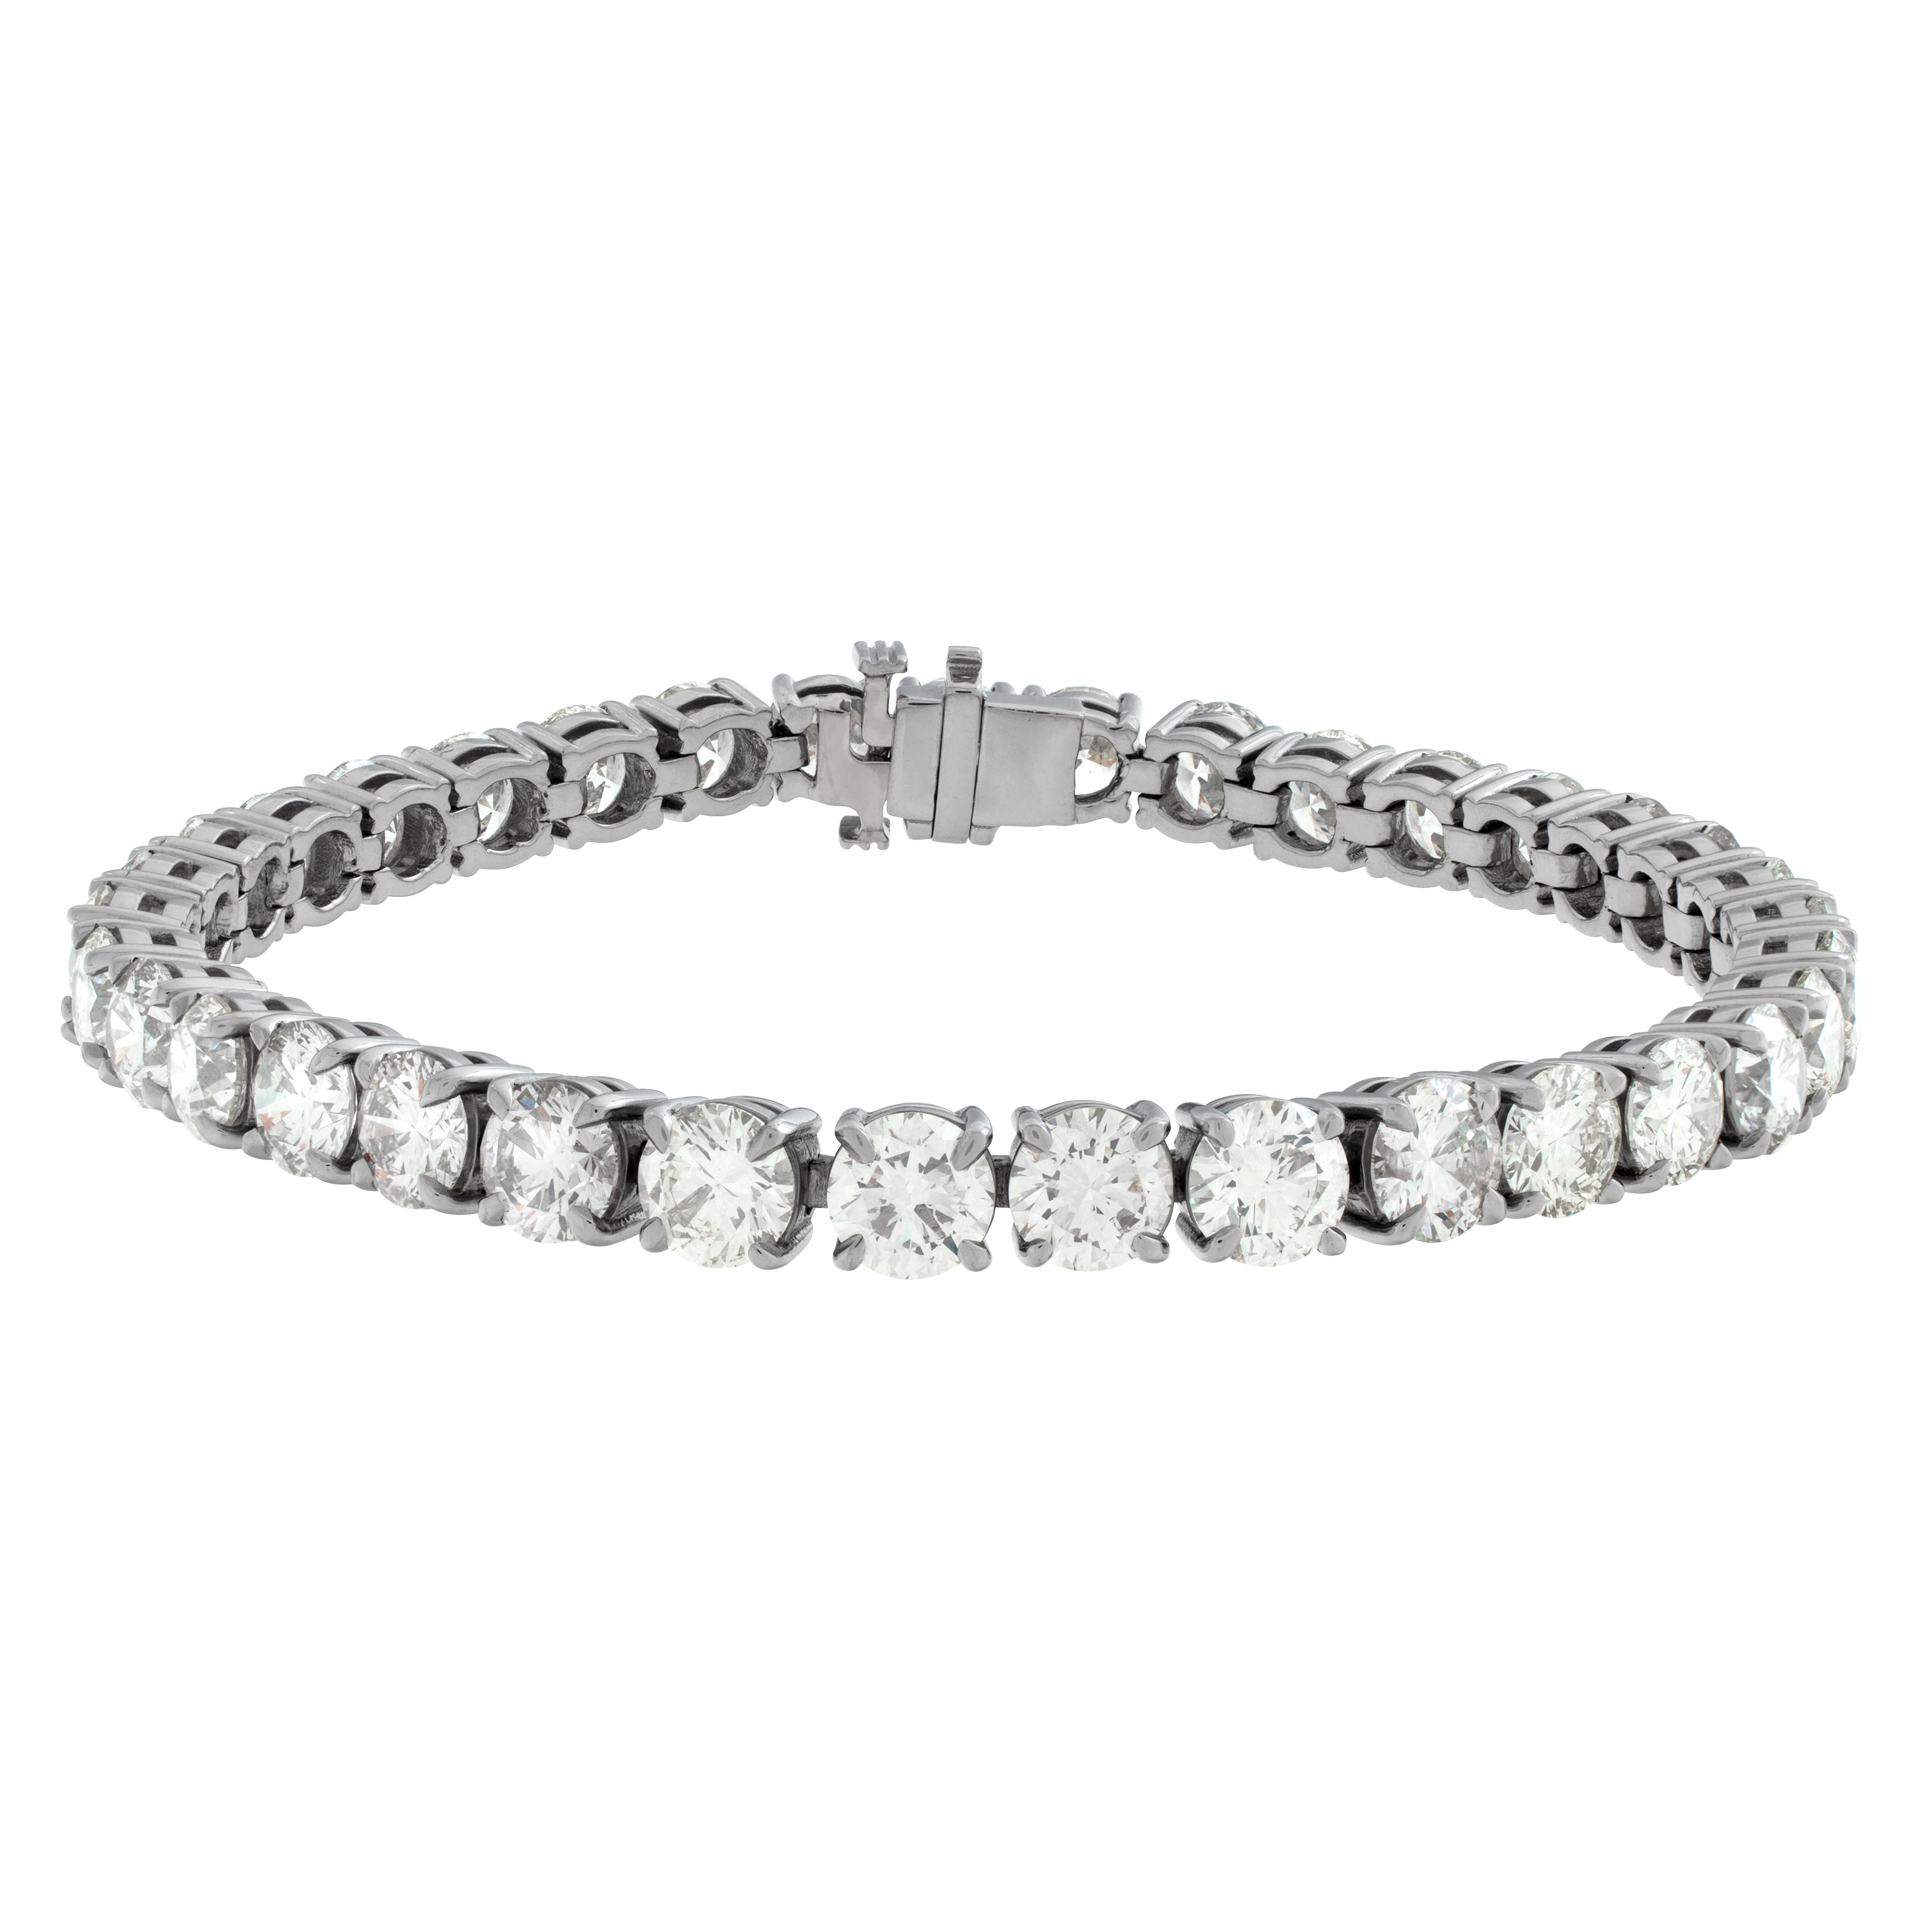 Round brilliant cut diamond line bracelet set in platinum.Approx. 19.76 carats total weight.